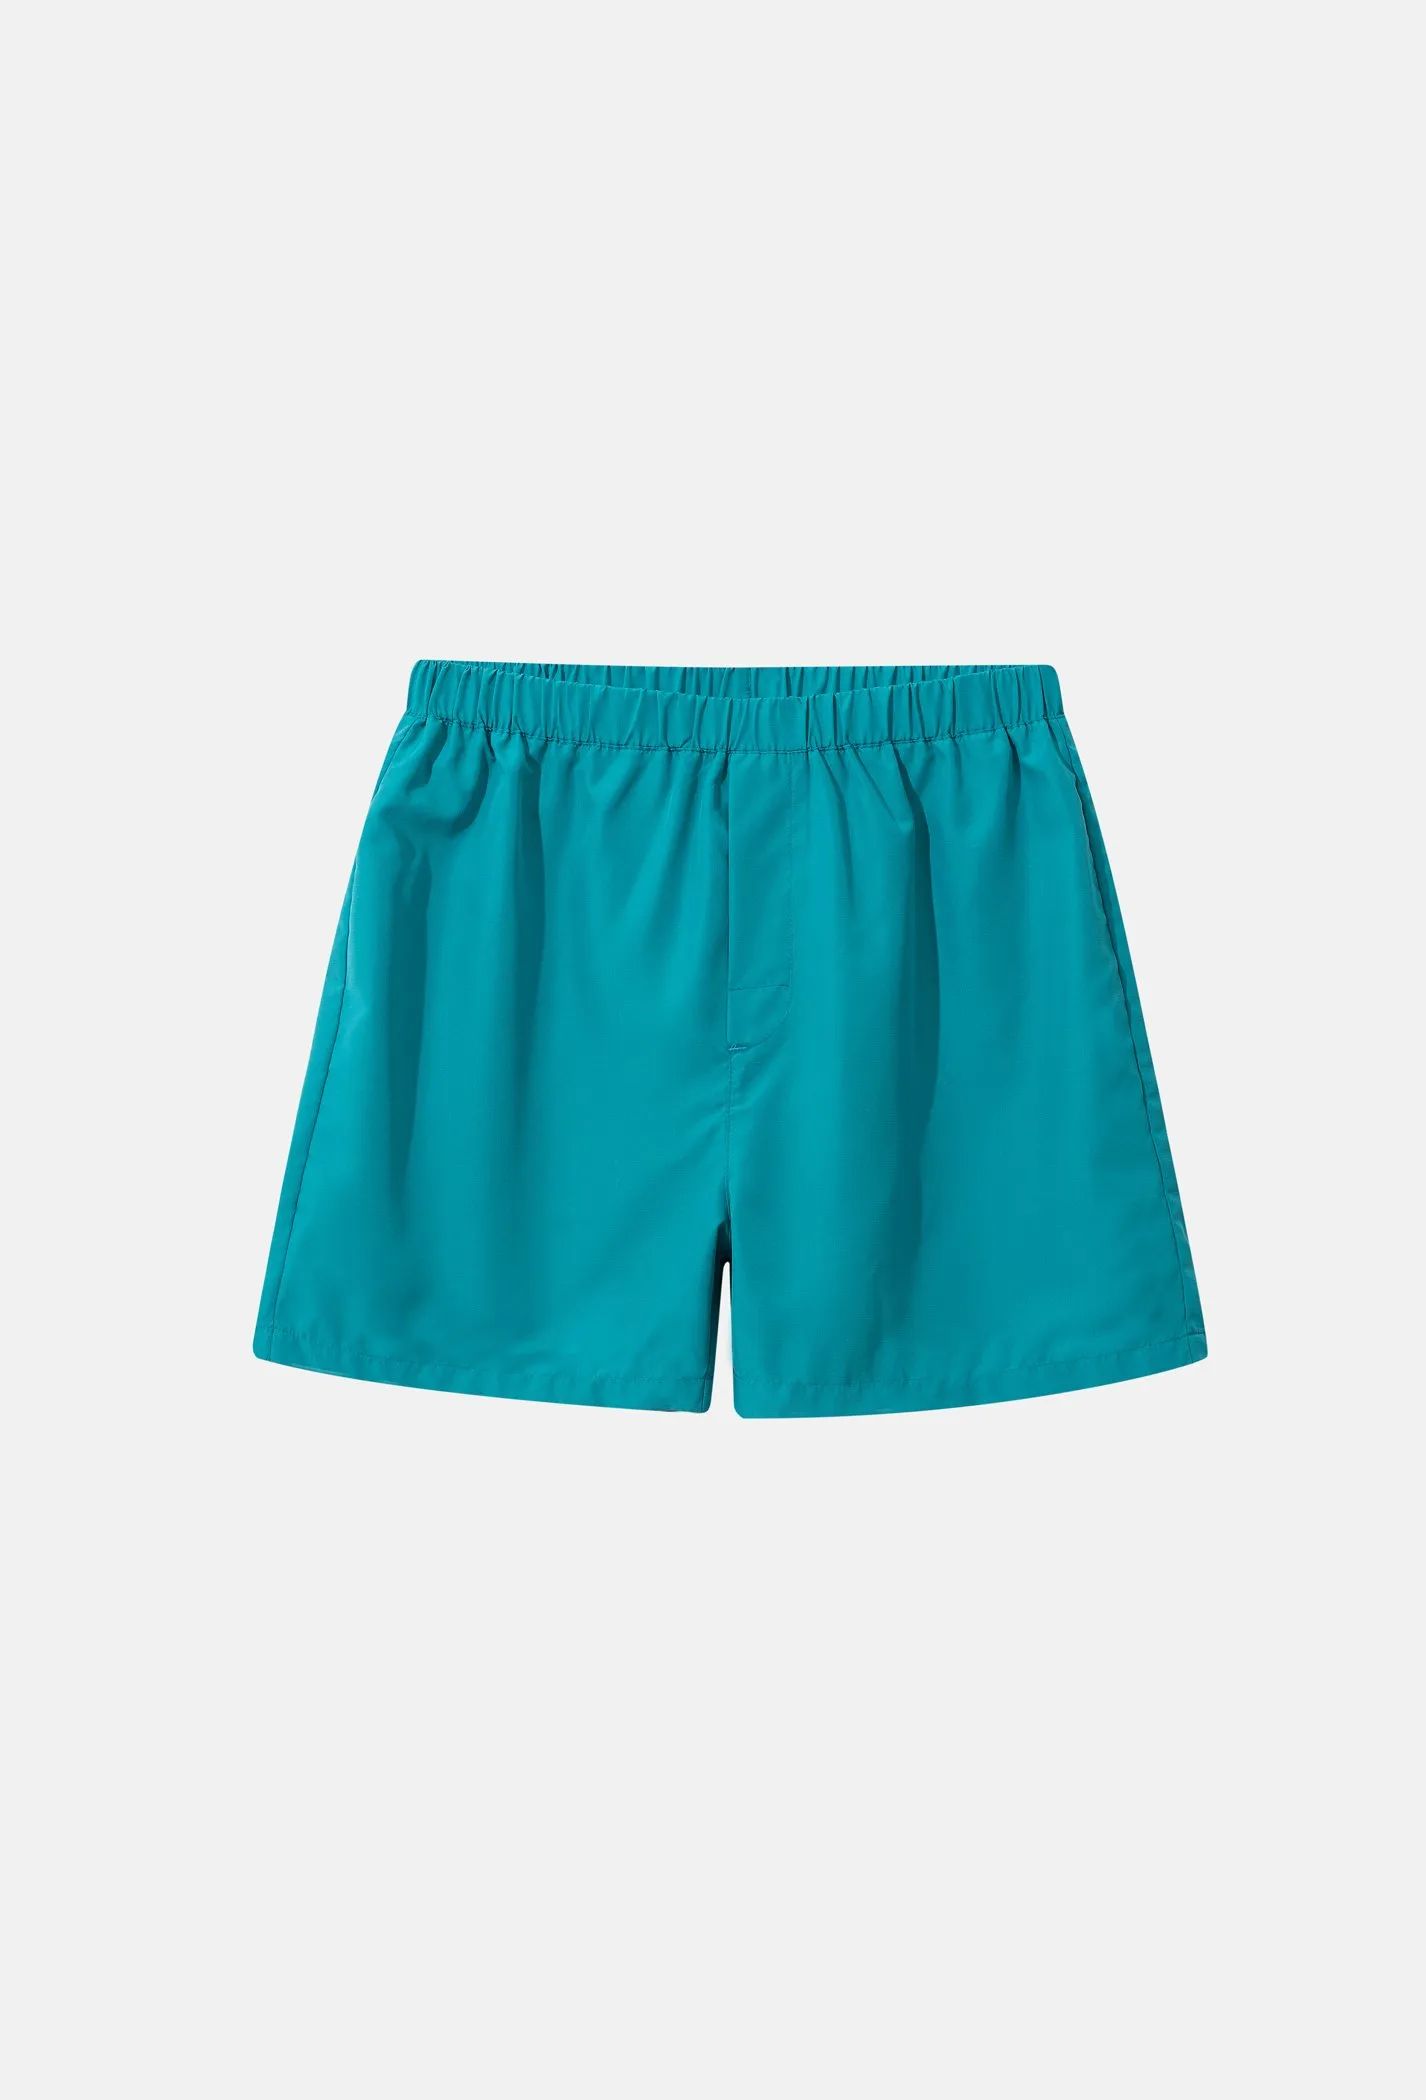 Combo 03 Quần Shorts mặc nhà Coolmate Basics Màu 1 2